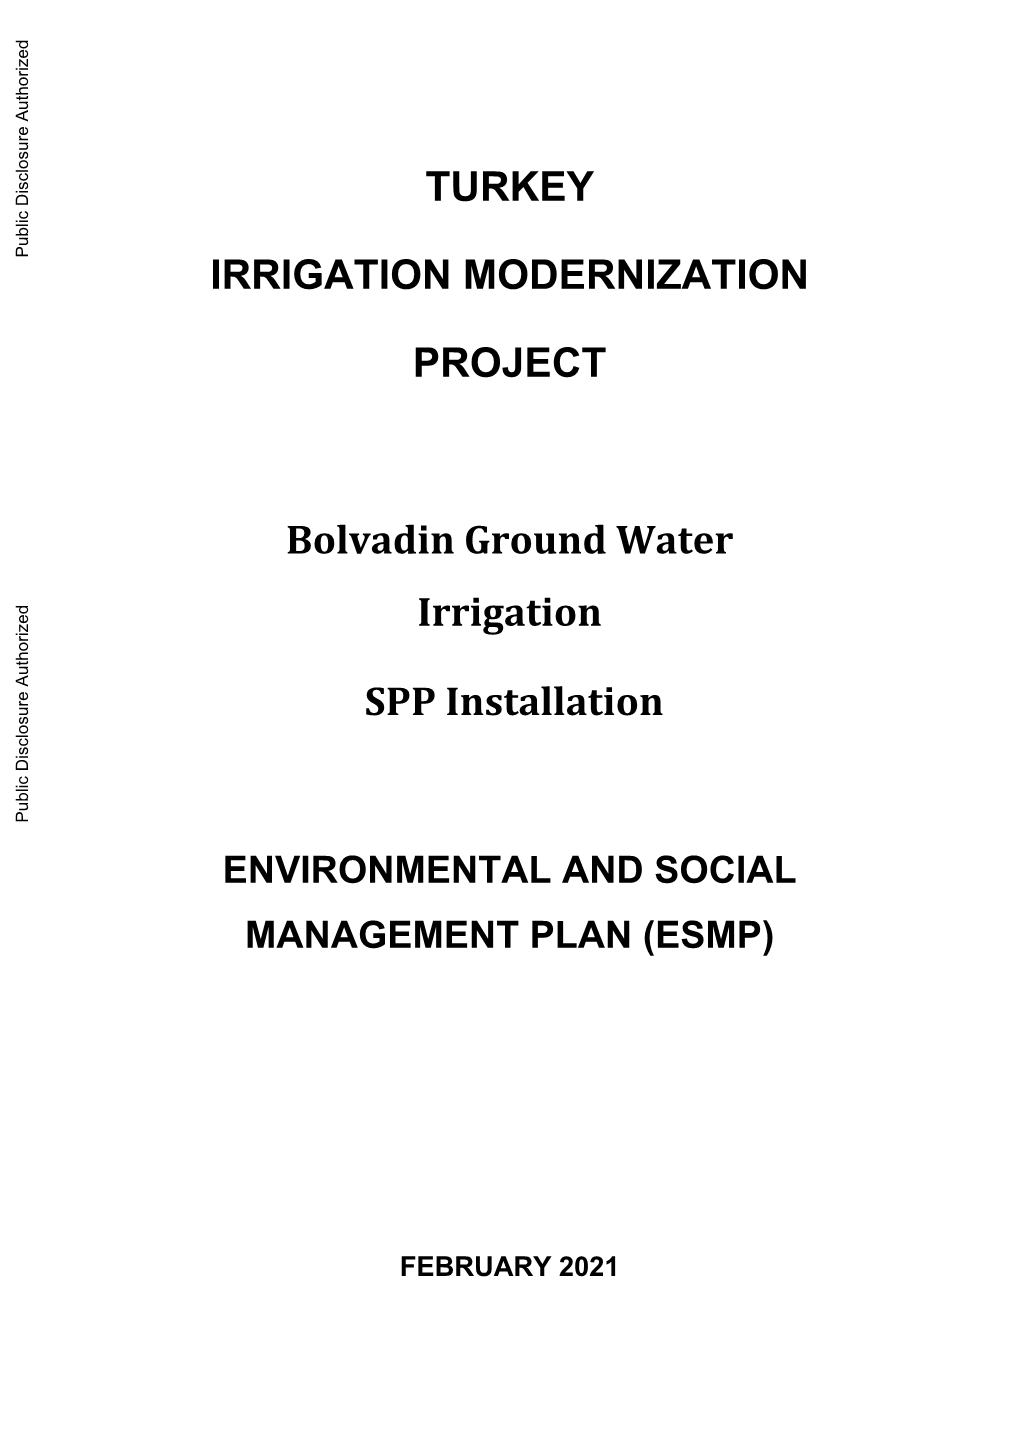 Turkey Irrigation Modernization Project